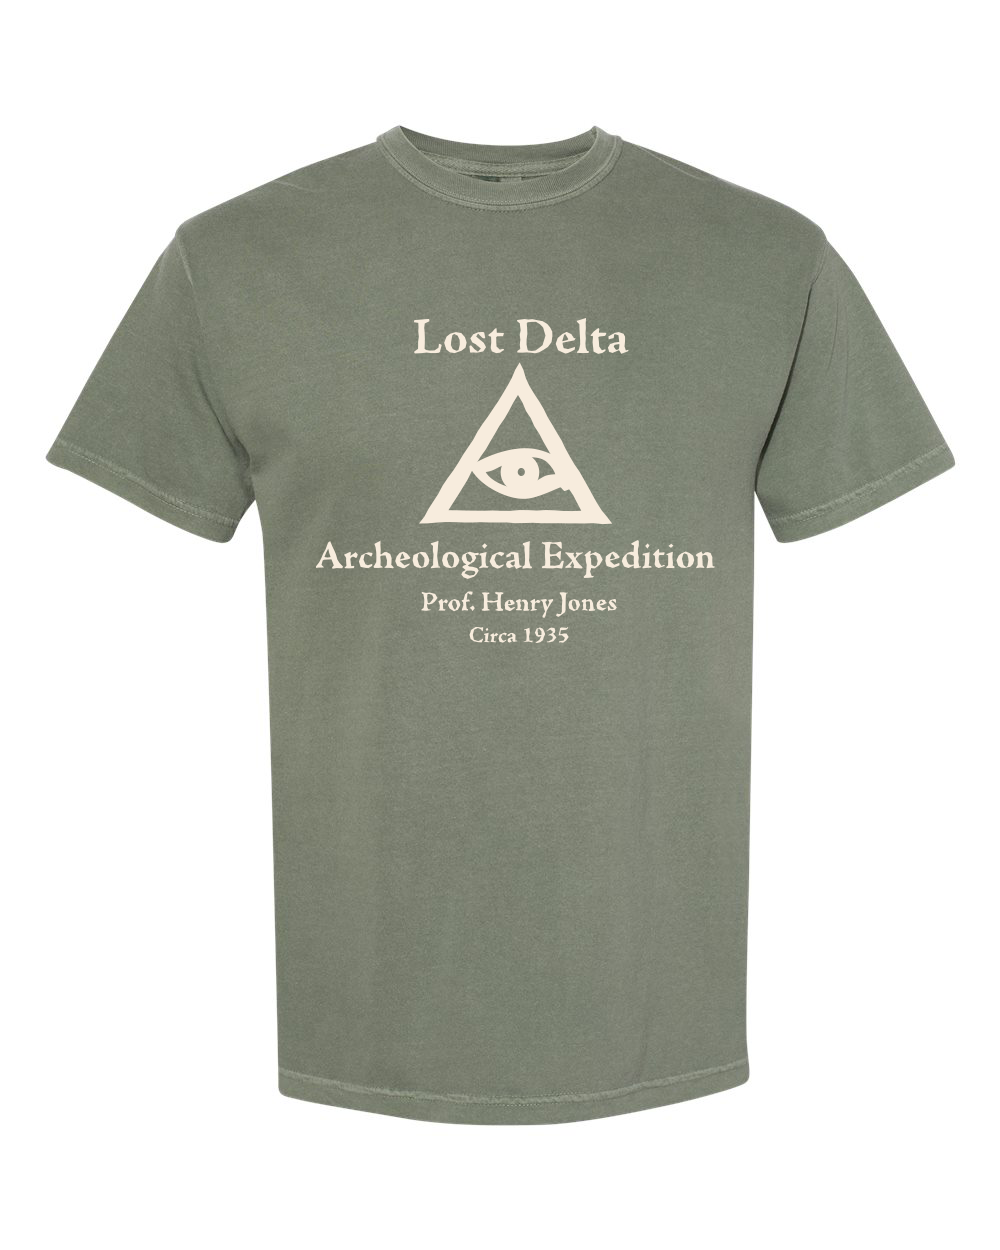 Lost Delta Expedition unisex short sleeve t-shirt